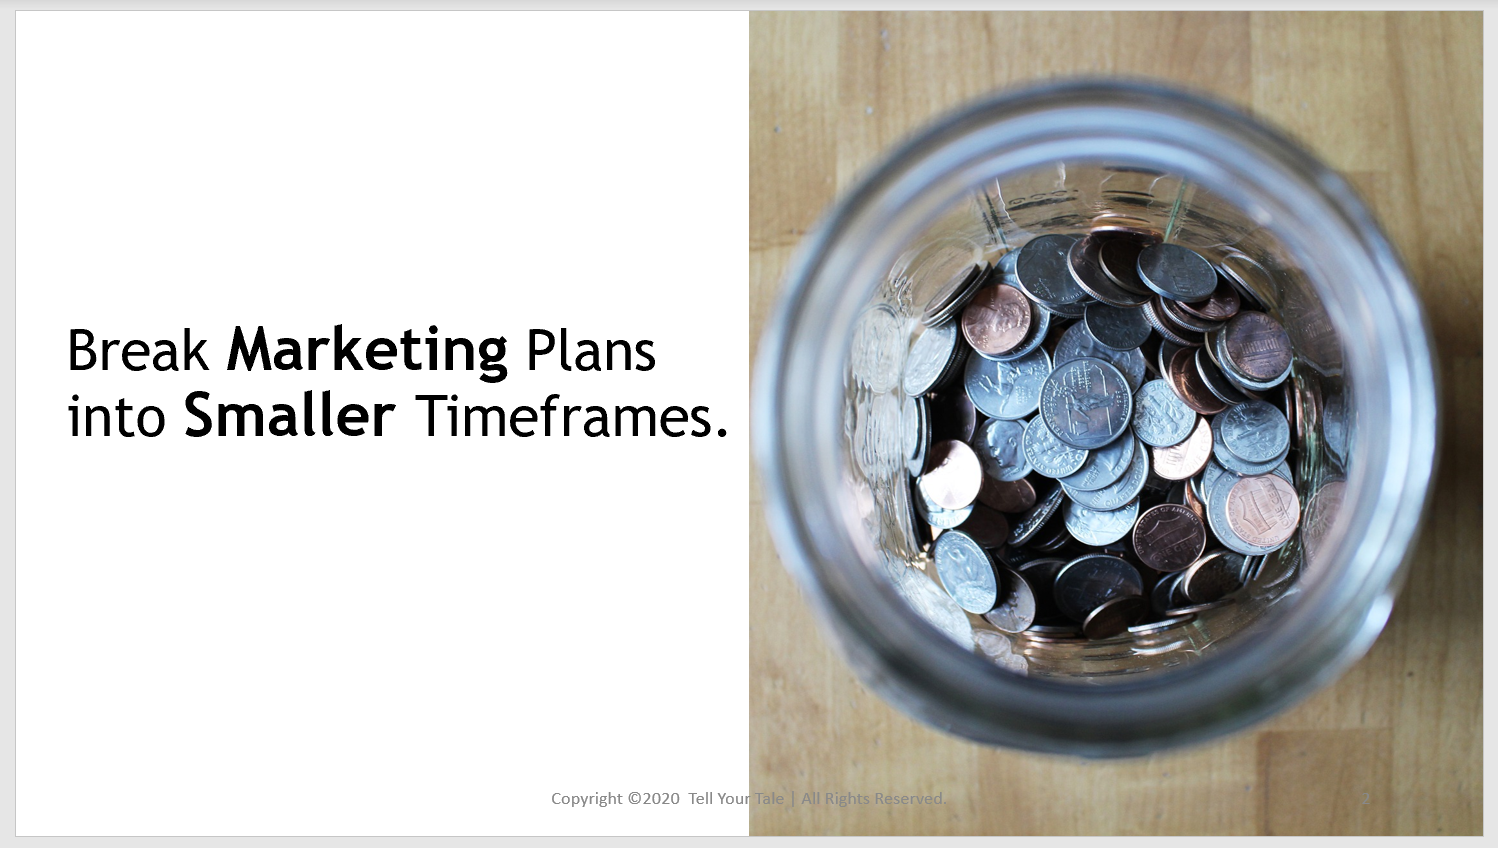 Break Marketing Plans into Smaller Timeframes